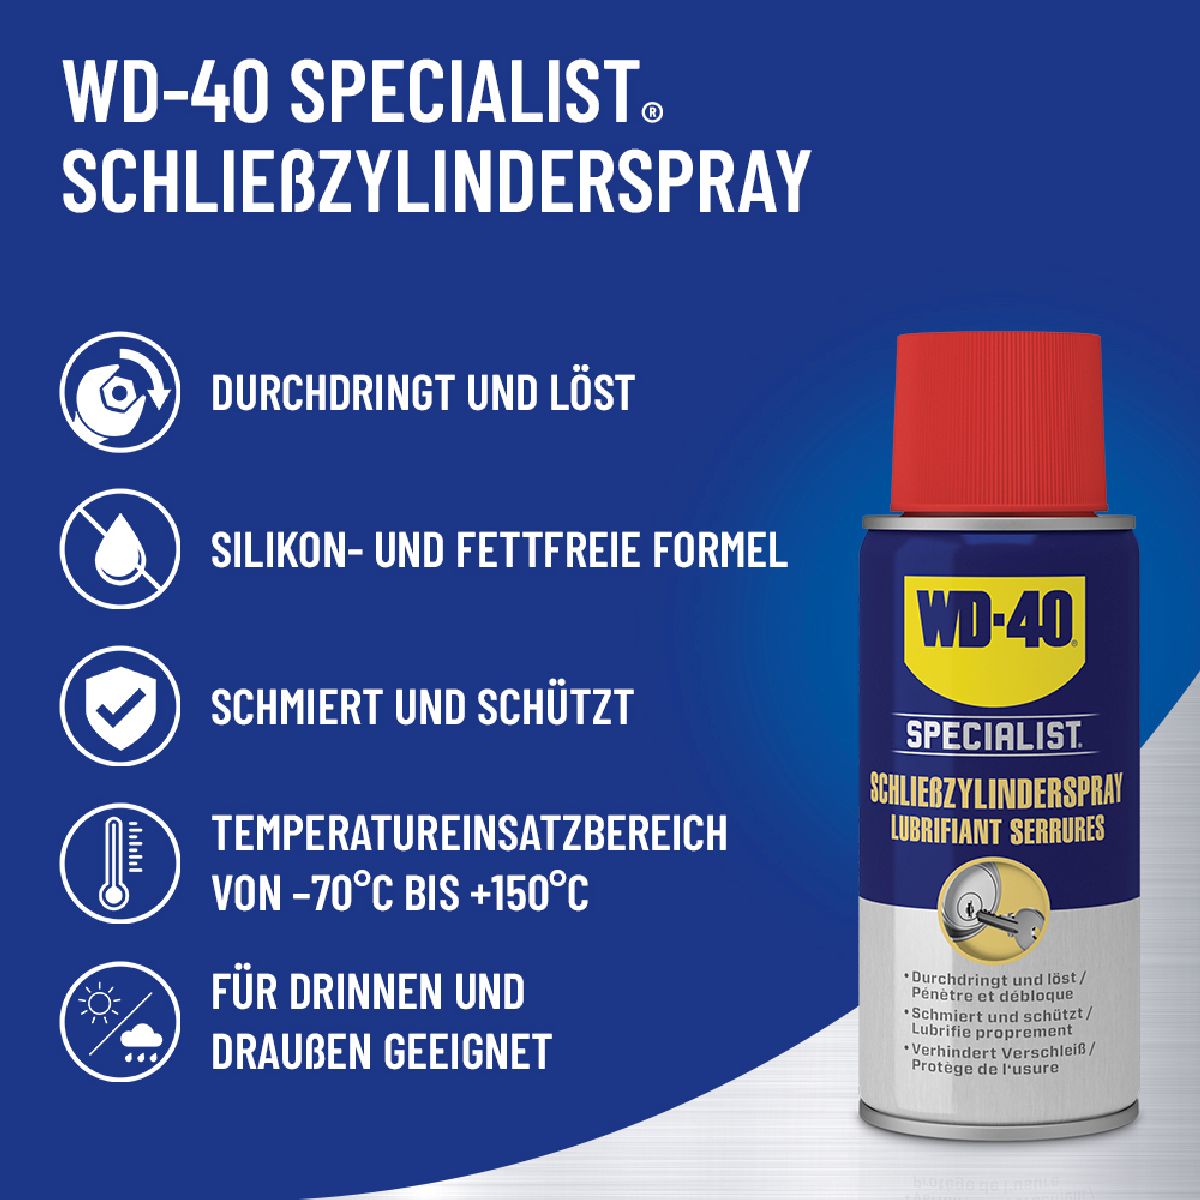 WD-40 Specialist lubrifiant serrures 